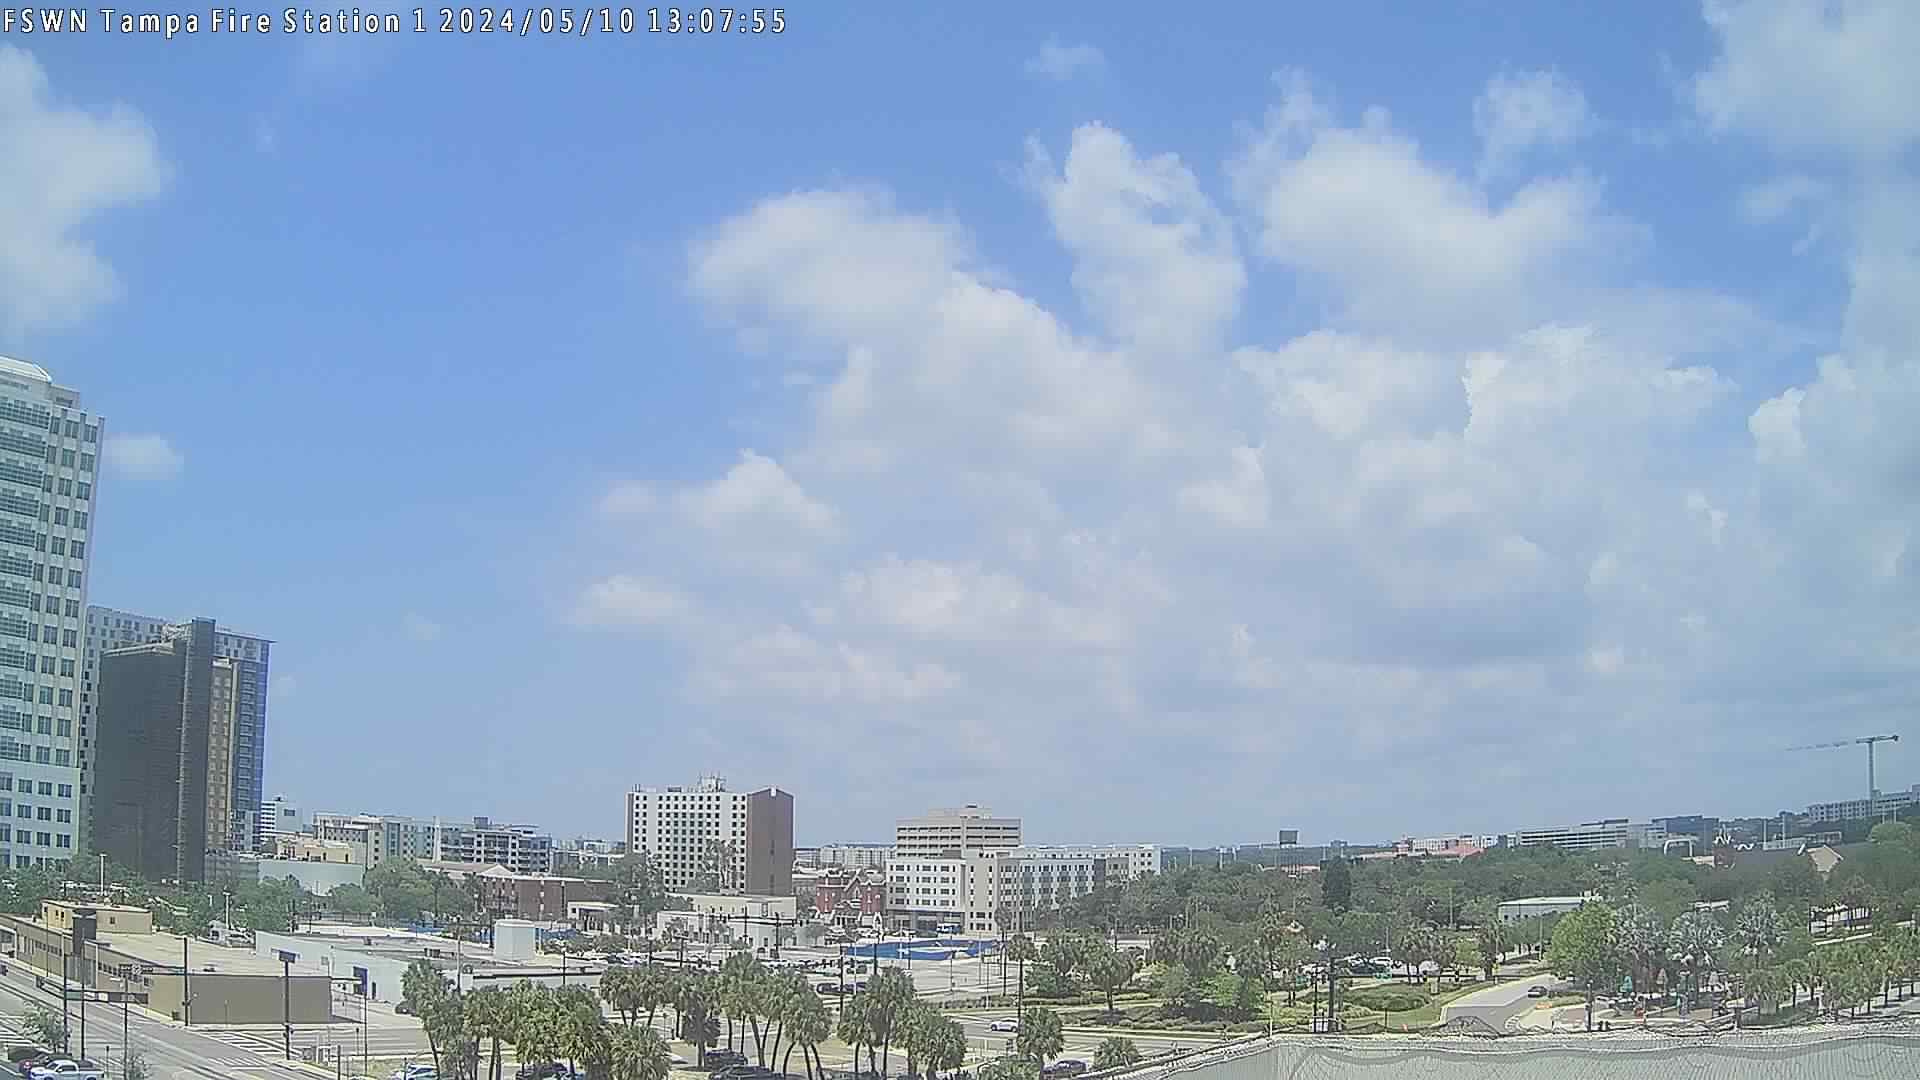  WeatherSTEM Cloud Camera FSWNTampaFire1 in Hillsborough County, Florida FL at FSWN AlertTampa Downtown